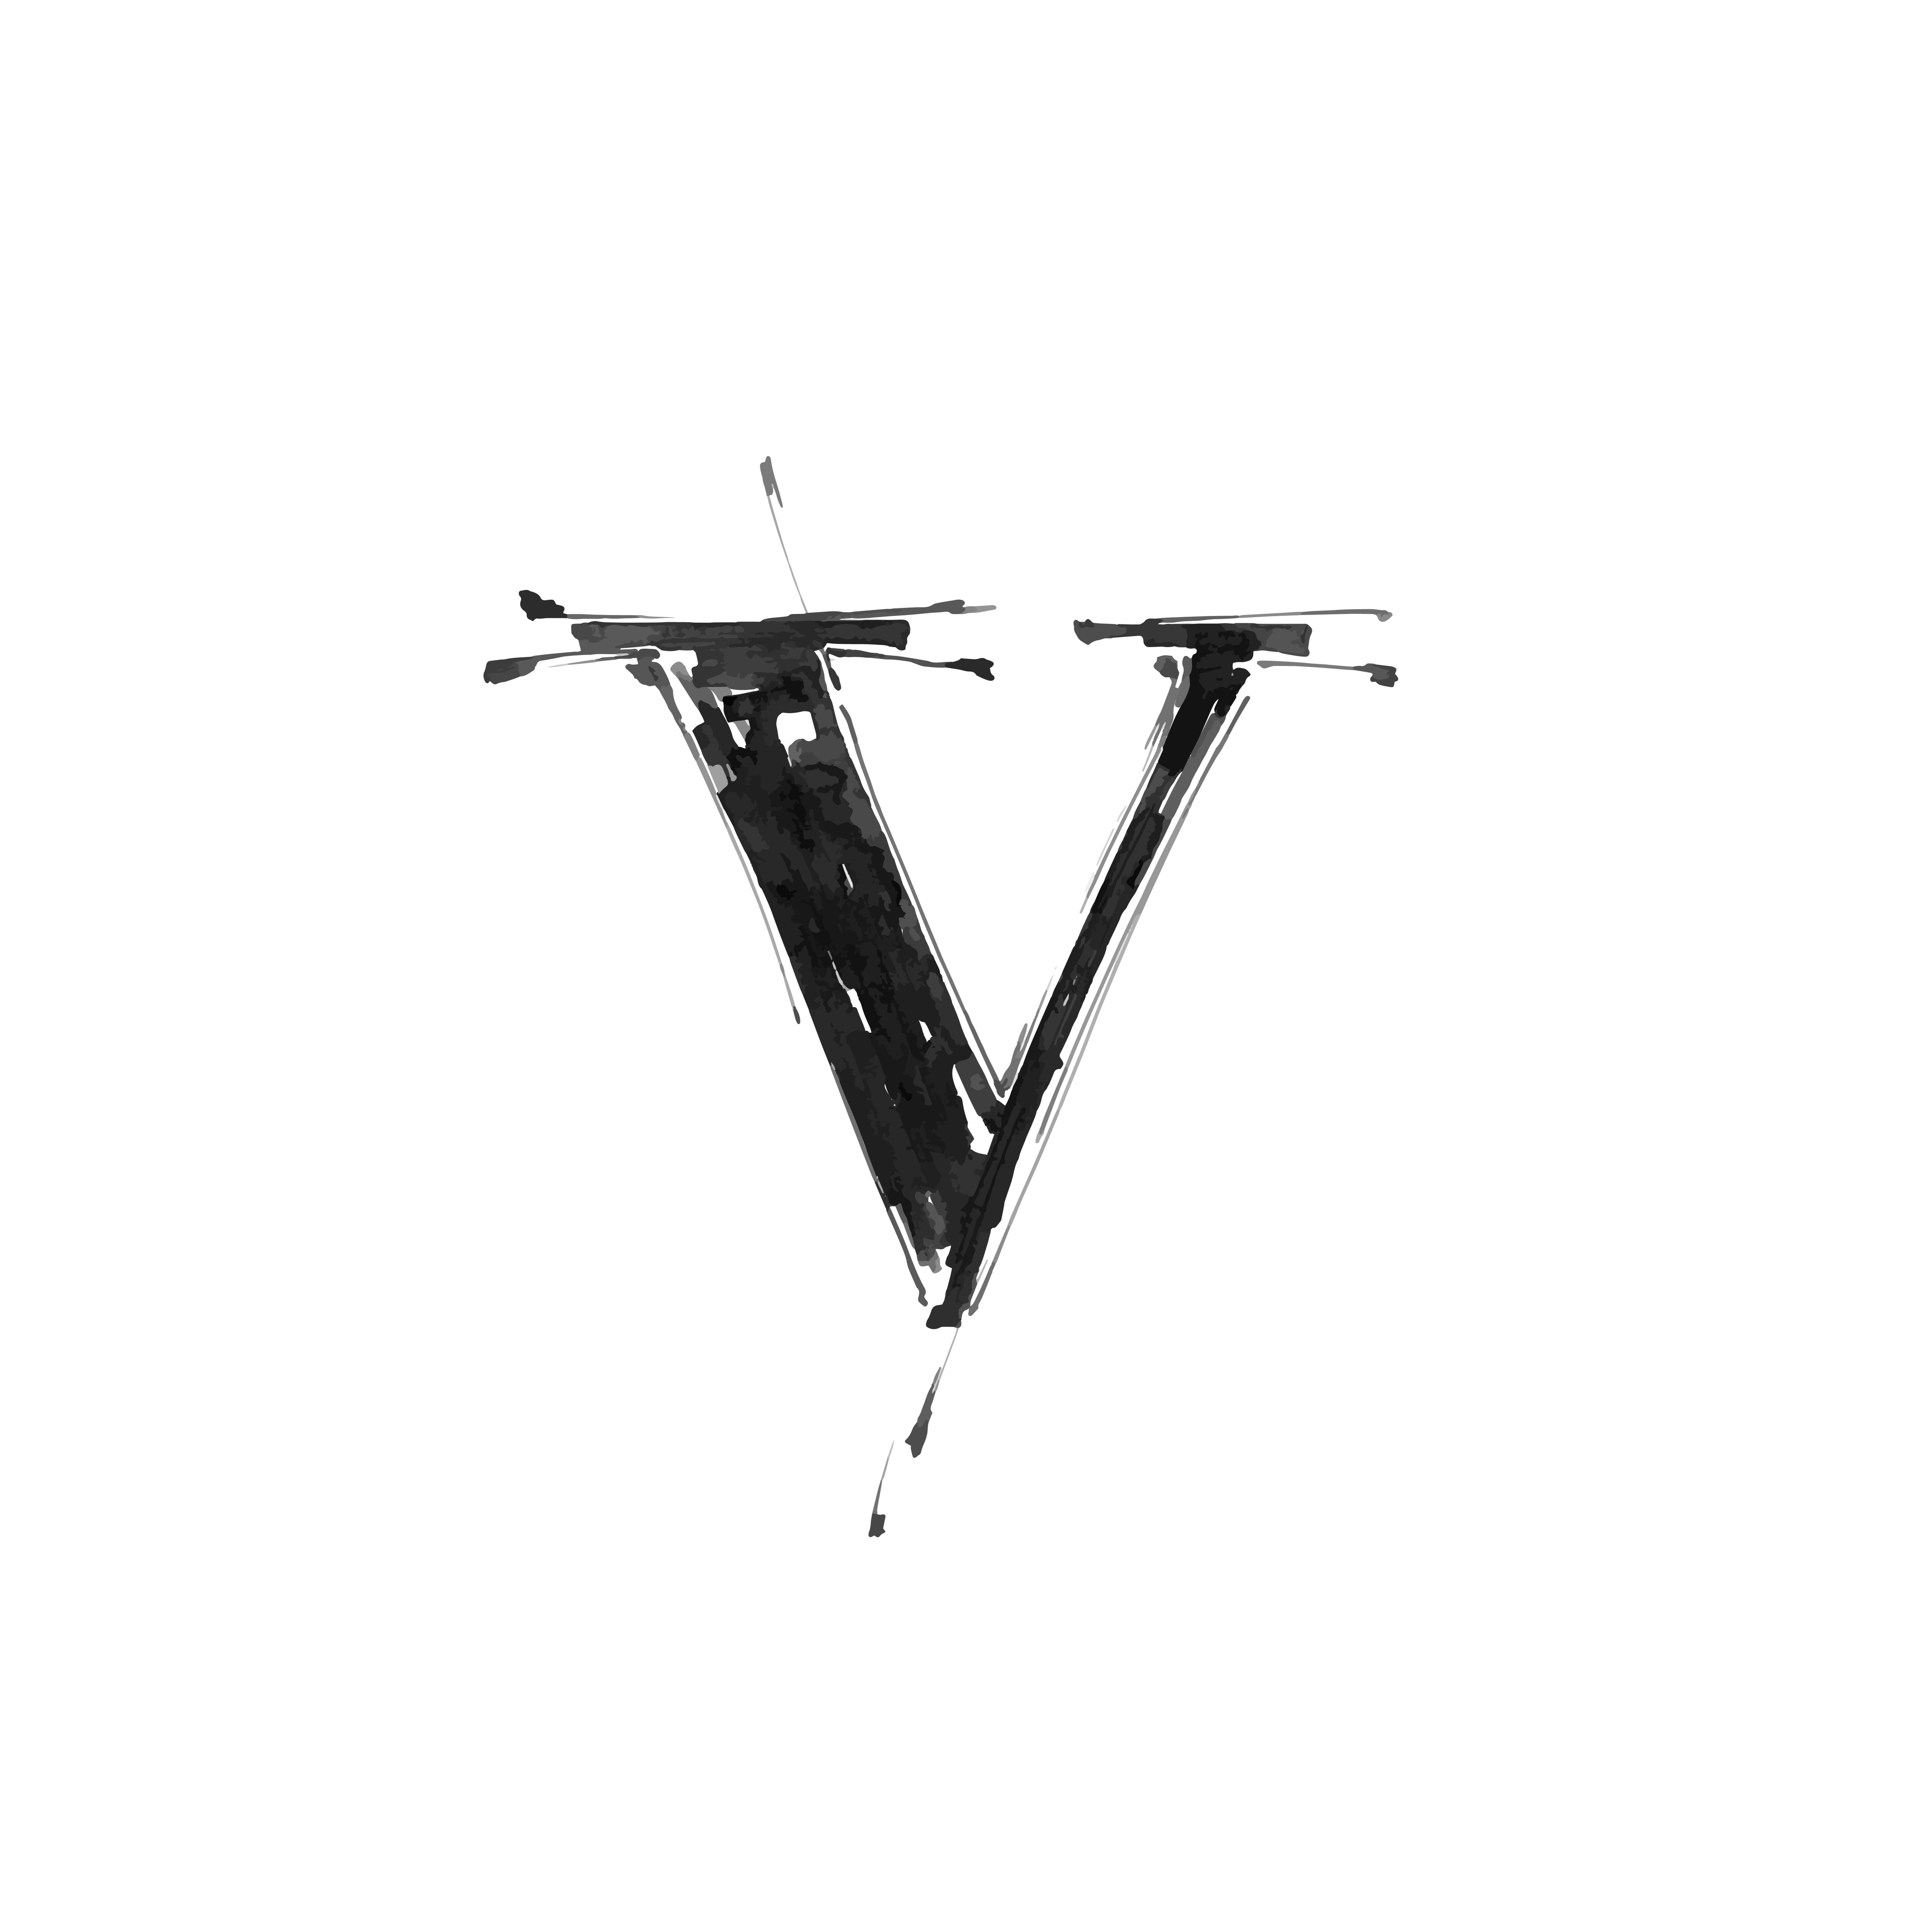 The Letter ‘V’ Quiz